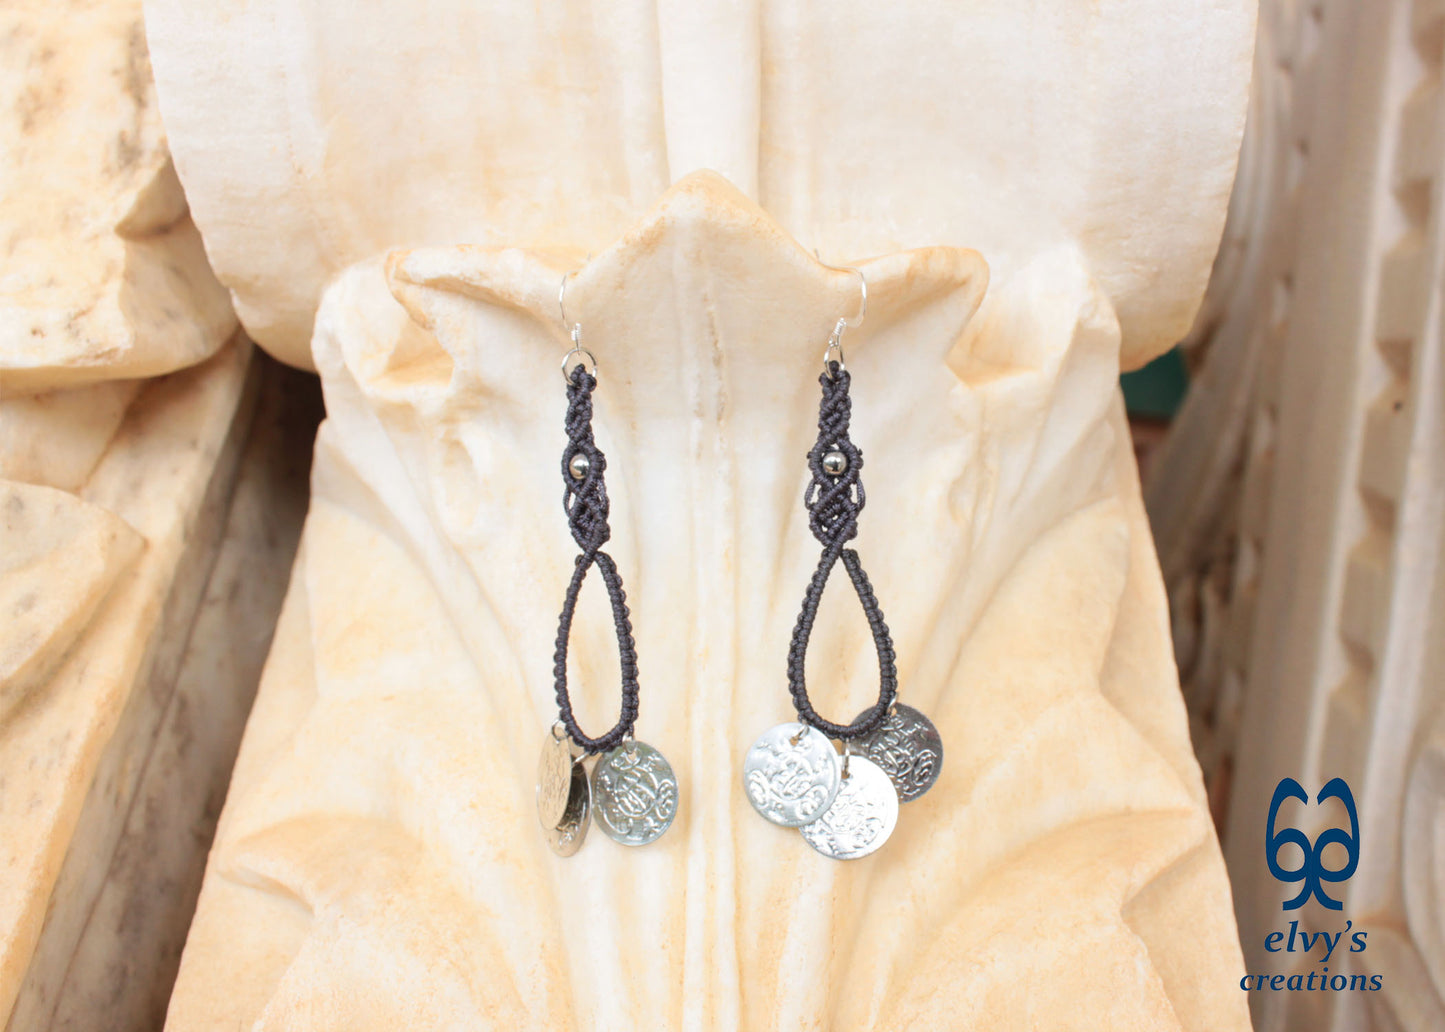 Gray Macrame Earrings with Hematite Gemstones Gypsy Earrings with Coins Boho Dangle with Coins, Μακραμέ Σκουλαρίκια με Φλουριά και Κρυστάλλους Αιματίτη